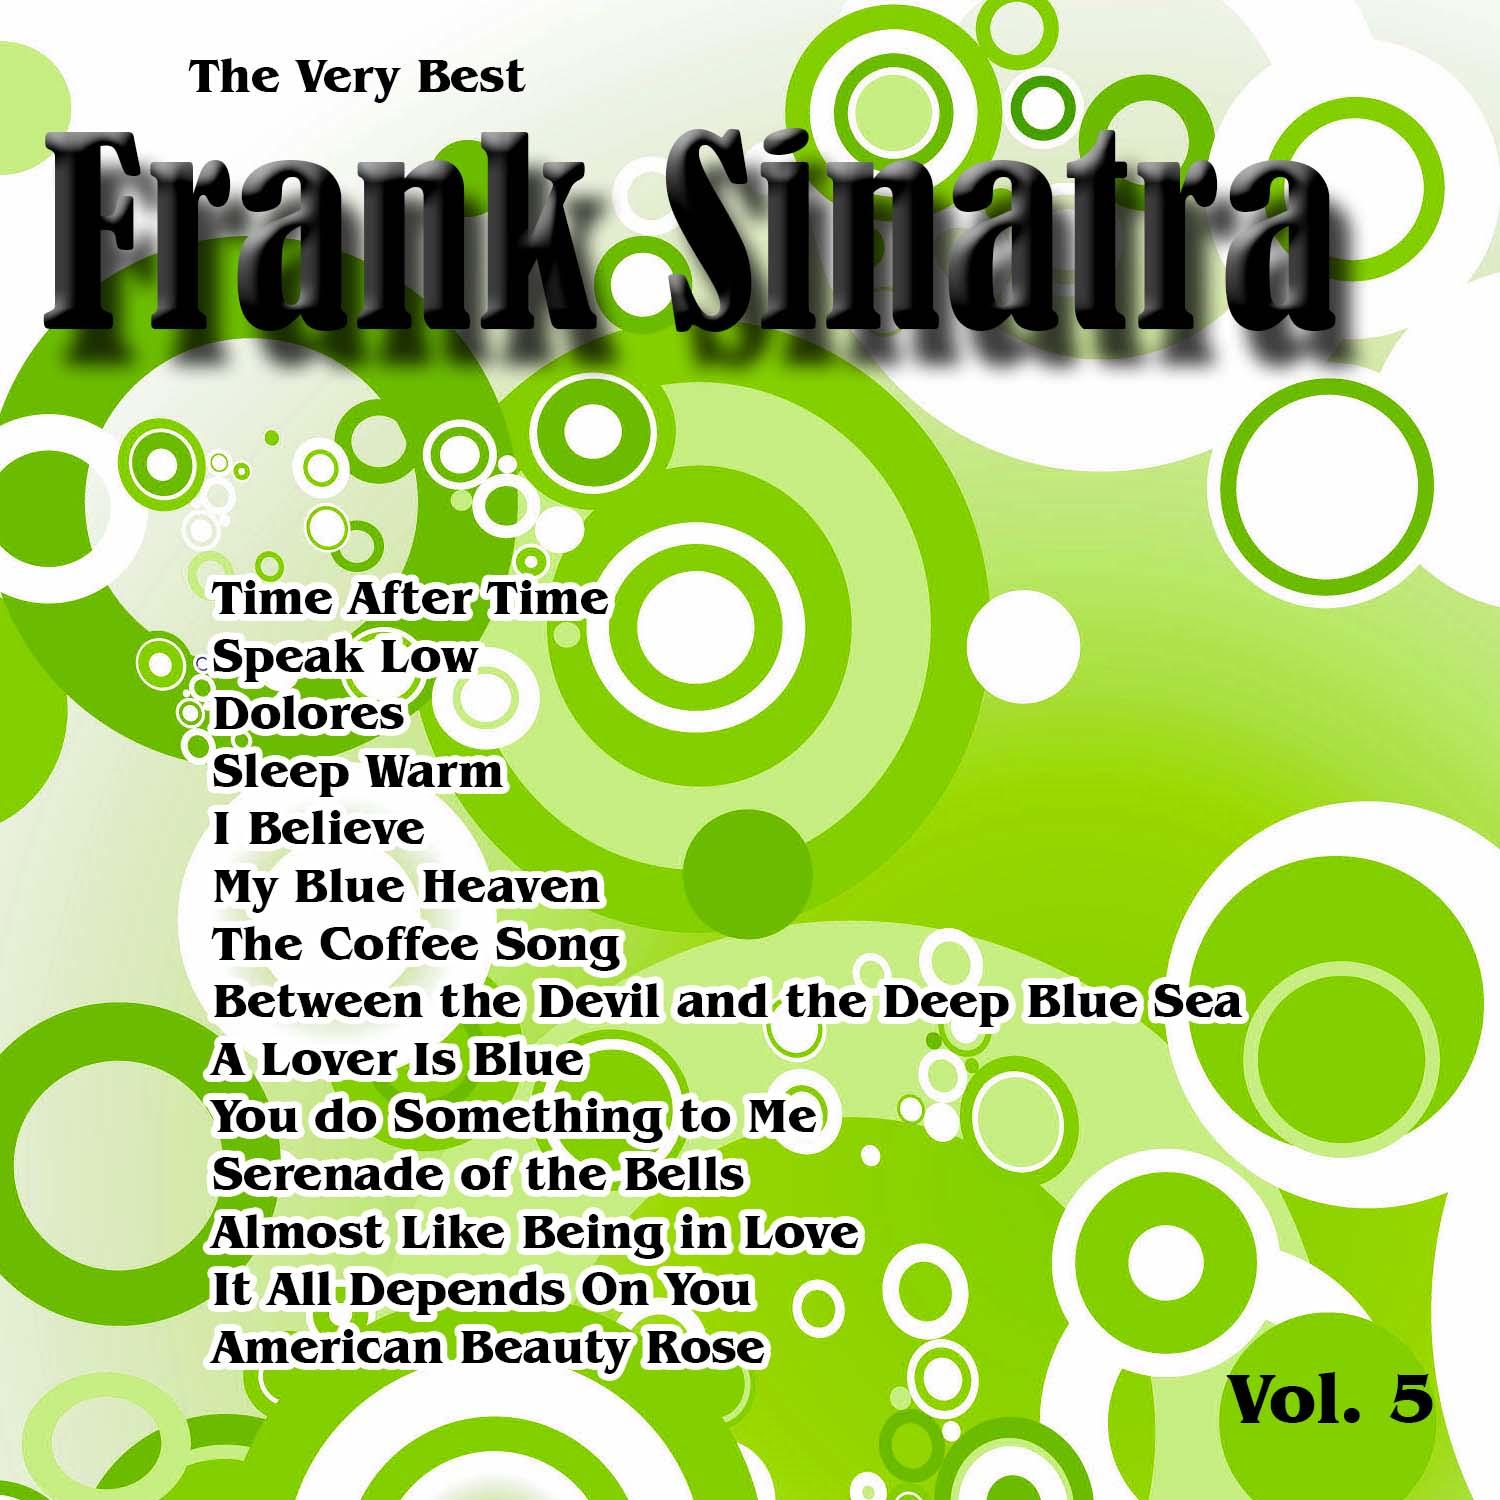 The Very Best: Frank Sinatra Vol. 5